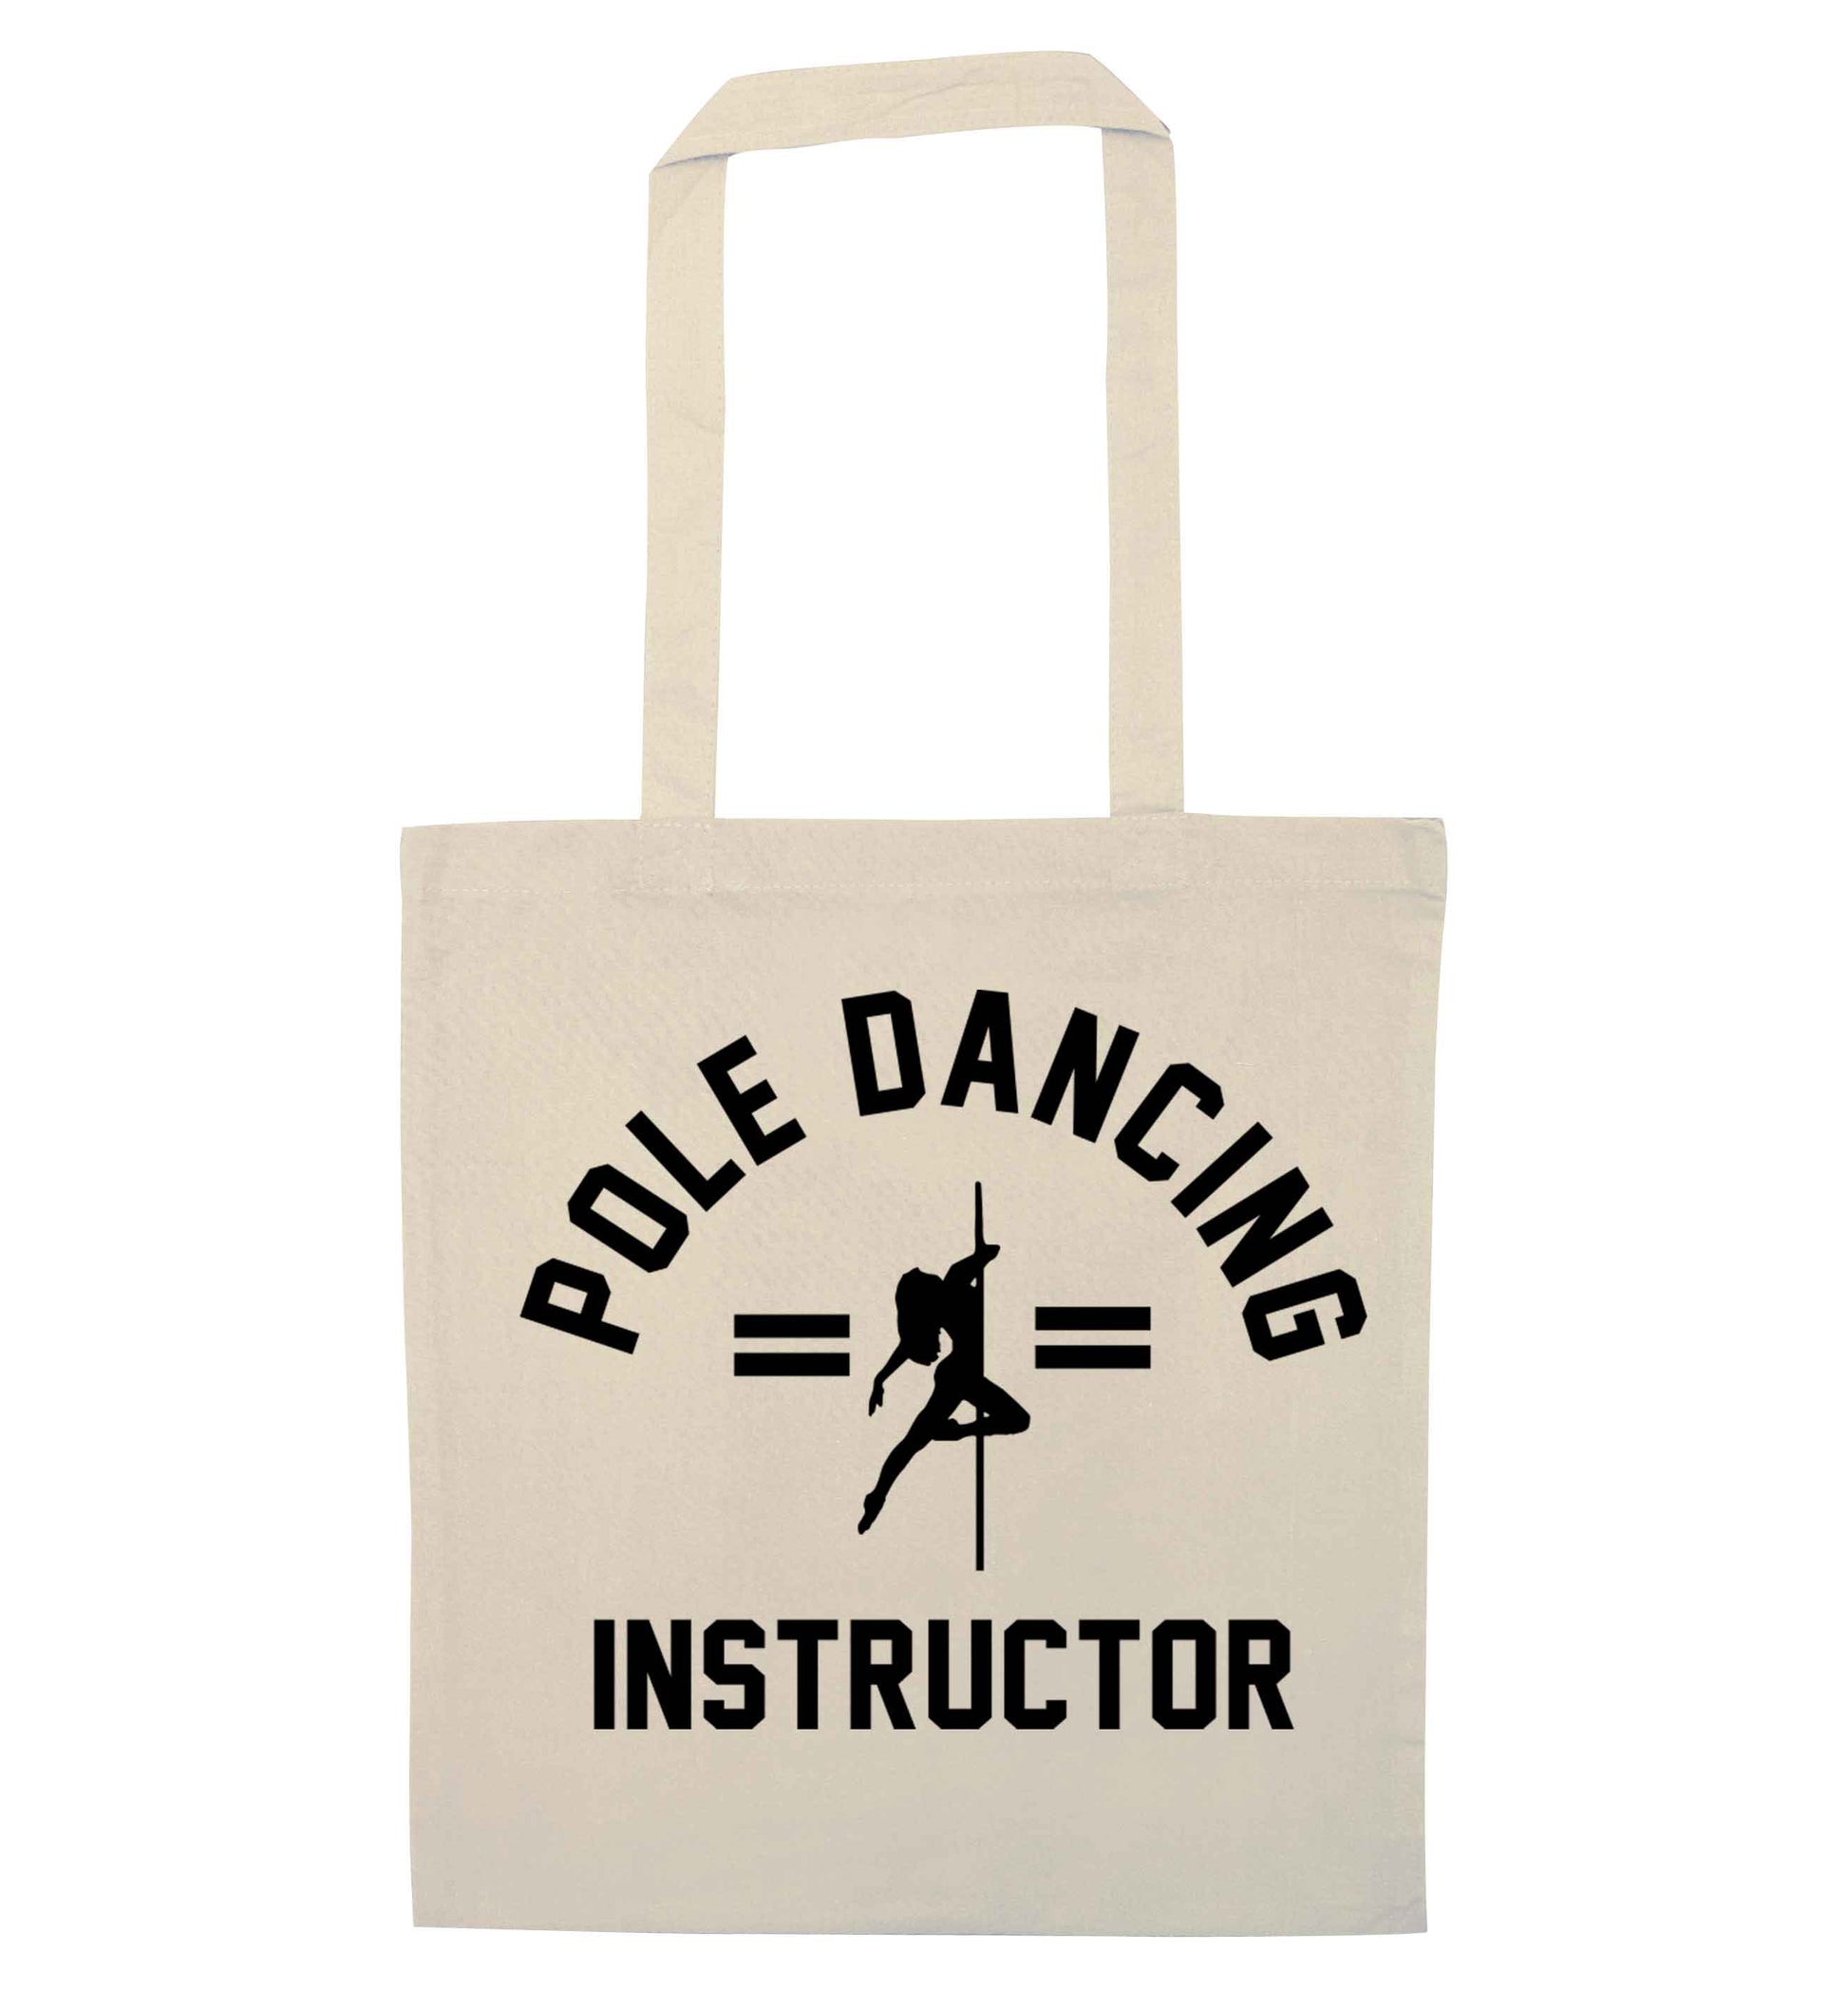 Pole dancing instructor natural tote bag